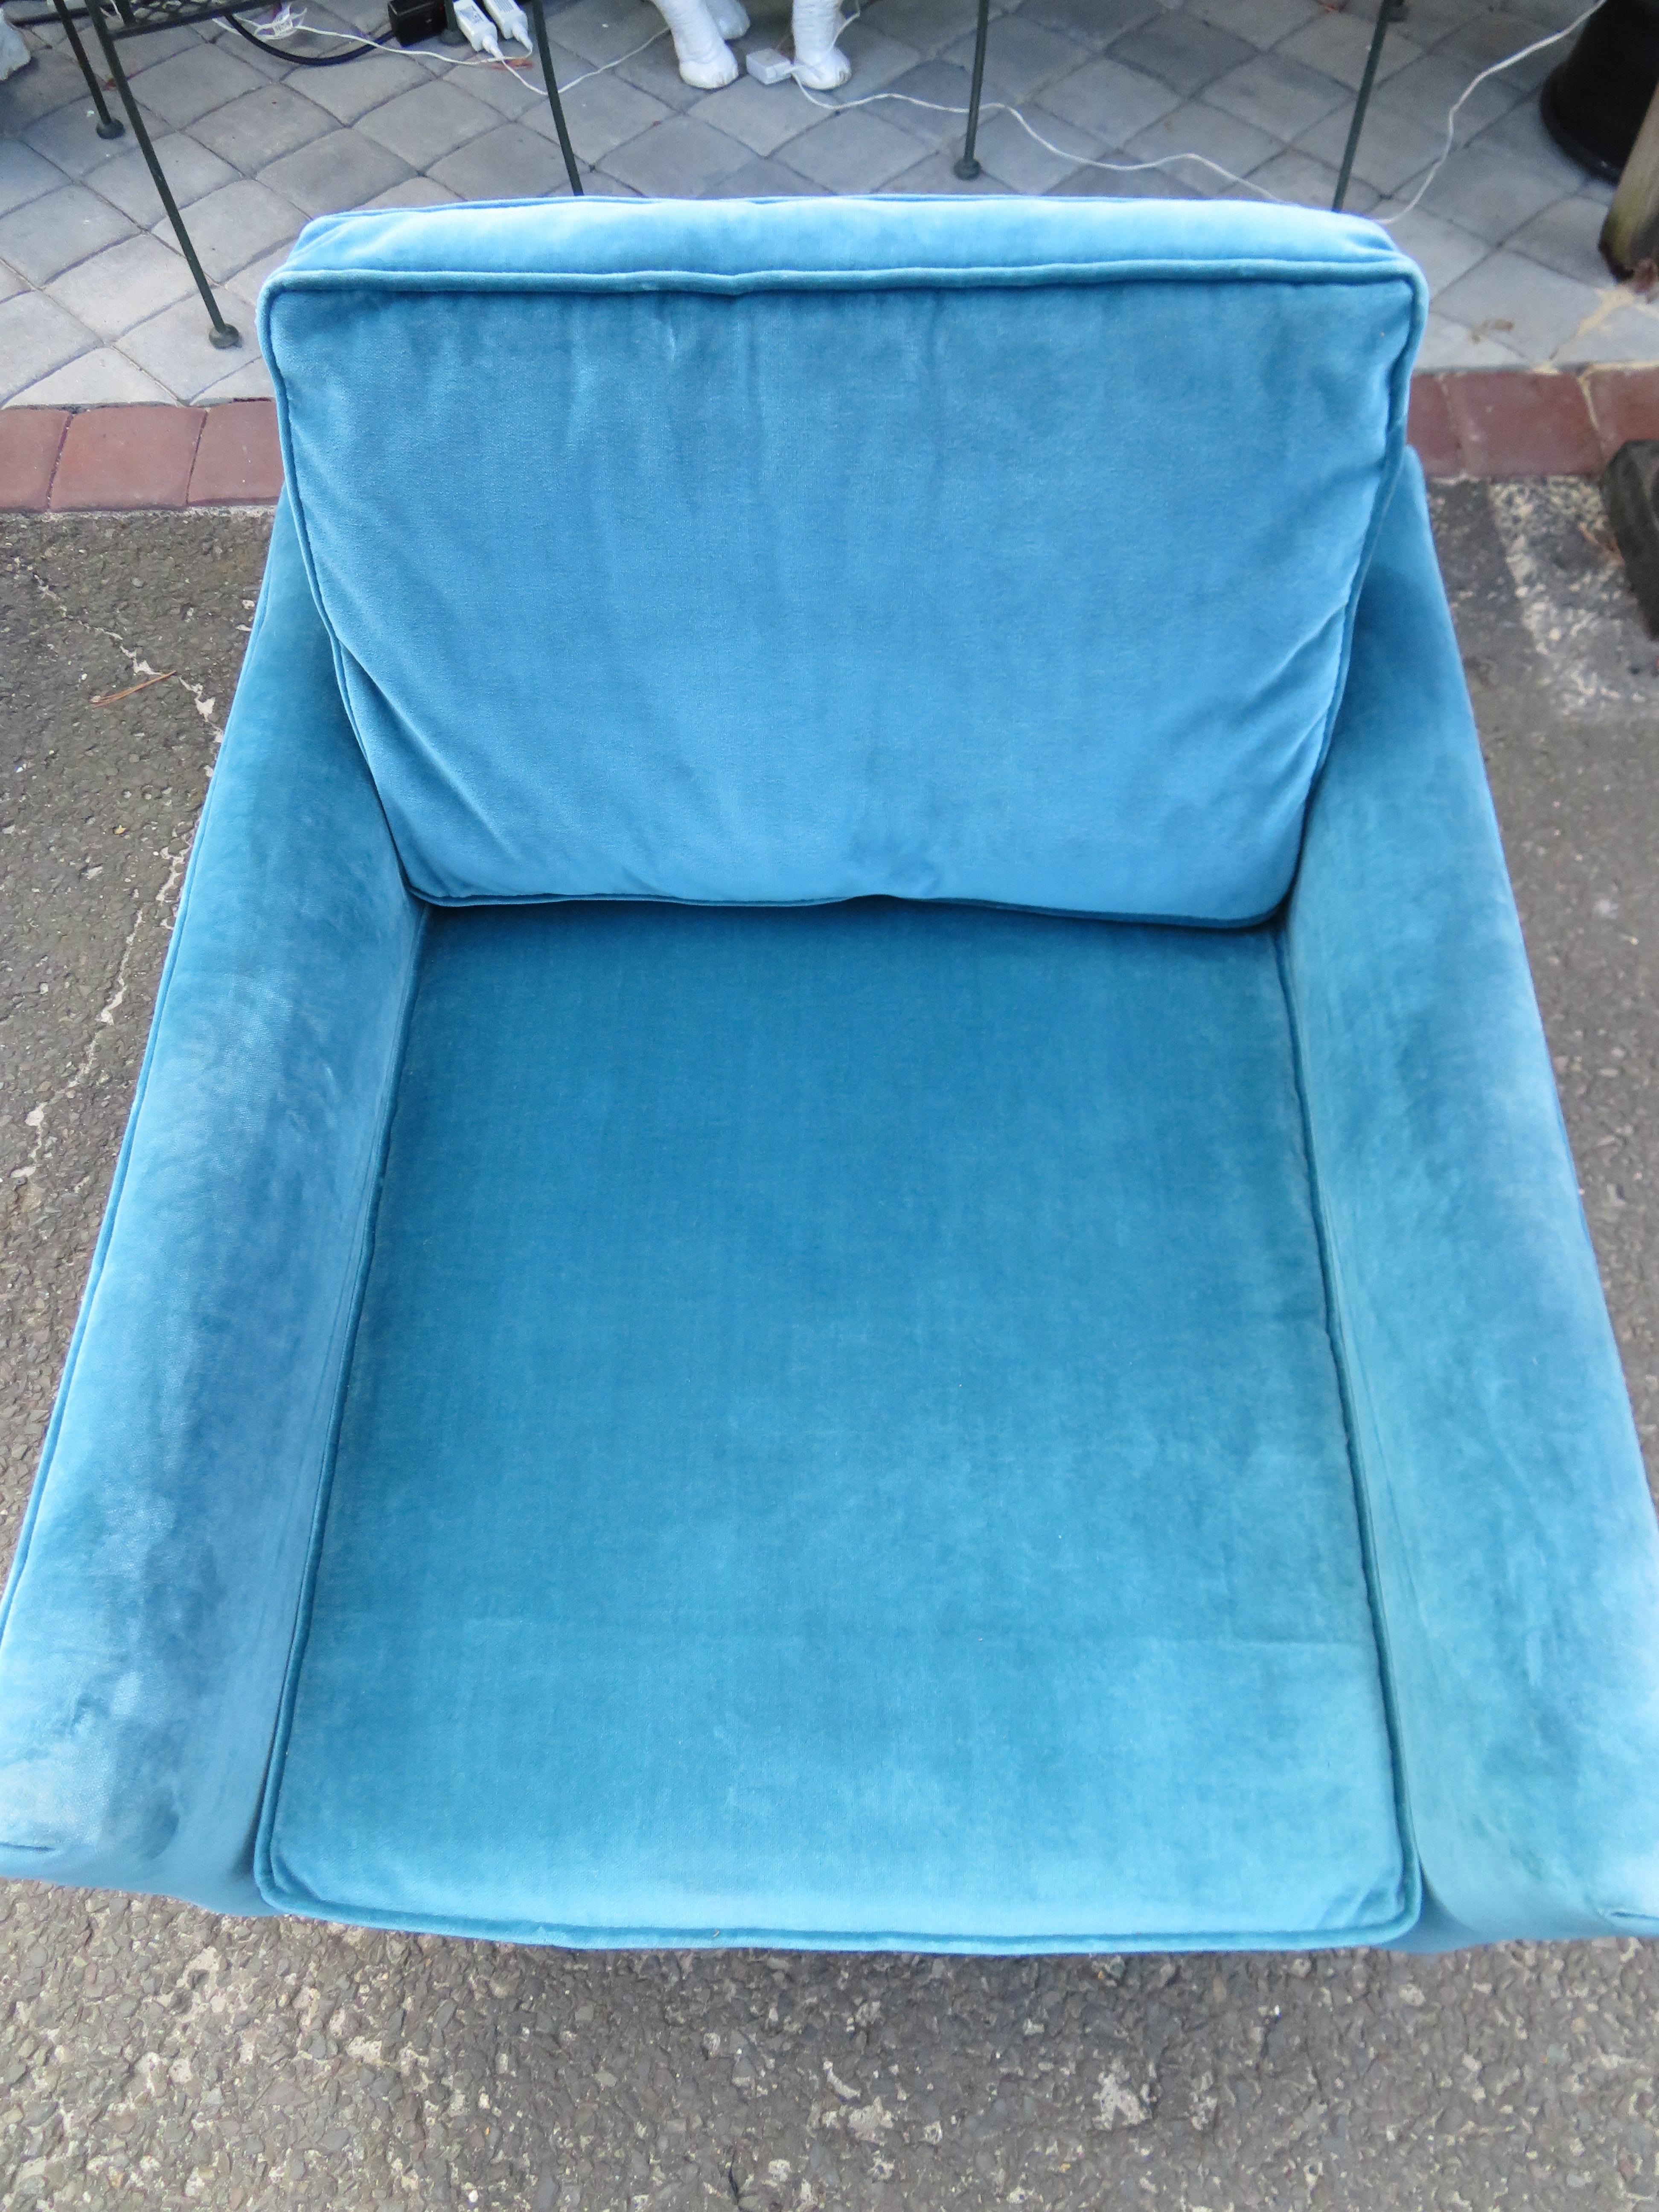 Handsome Milo Baughman Lounge Chair Thayer Coggin Mid-Century Modern In Good Condition For Sale In Pemberton, NJ